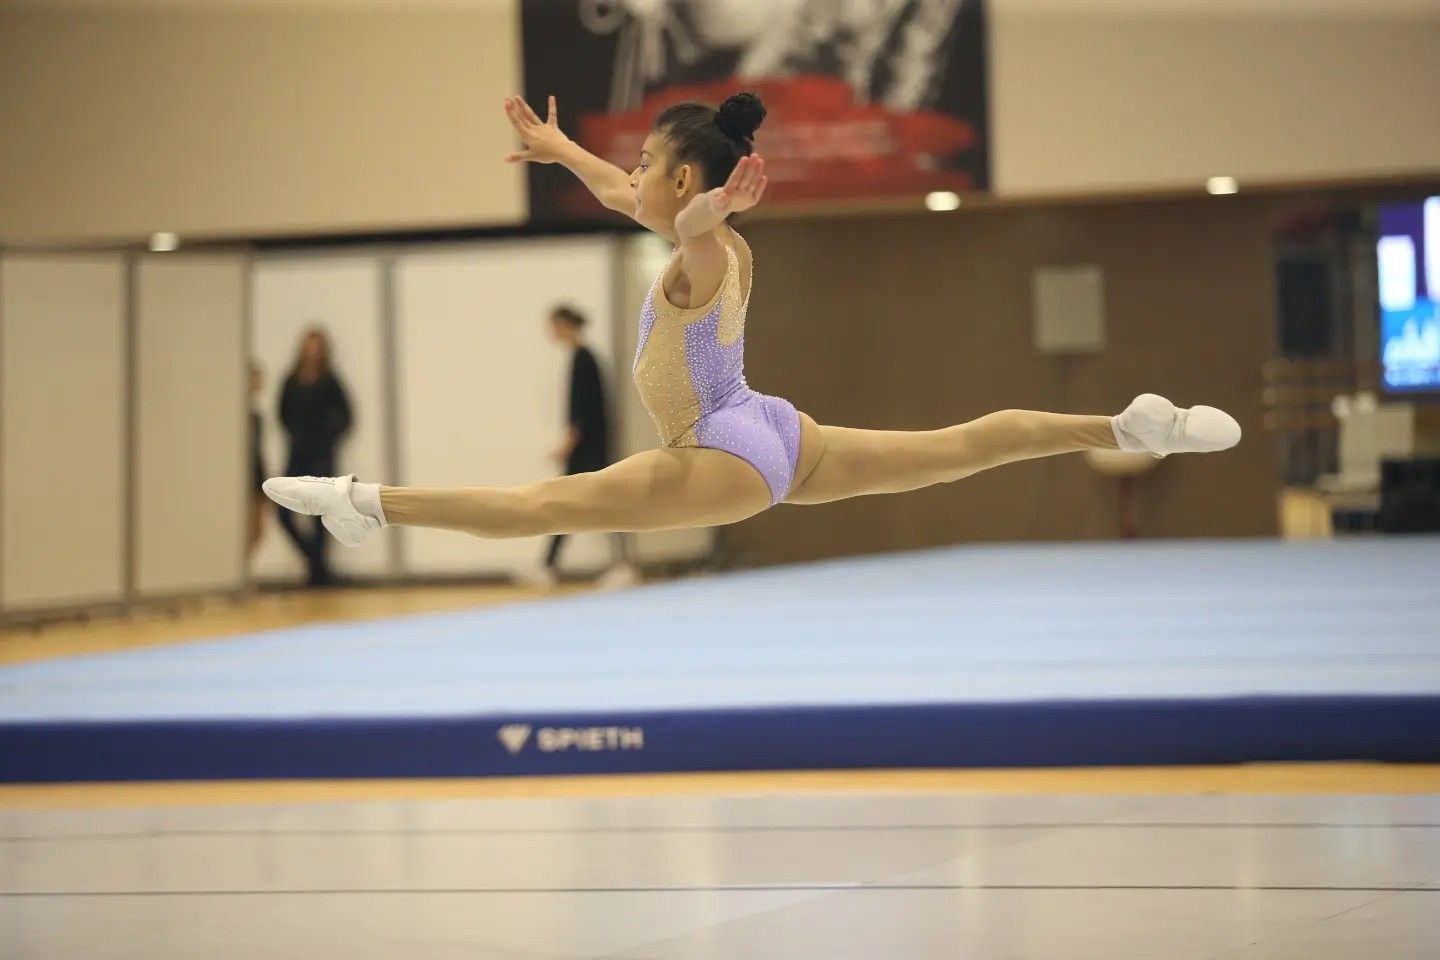 Championships on Aerobic & Acrobatic Gymnastics kick off in Baku [PHOTOS]